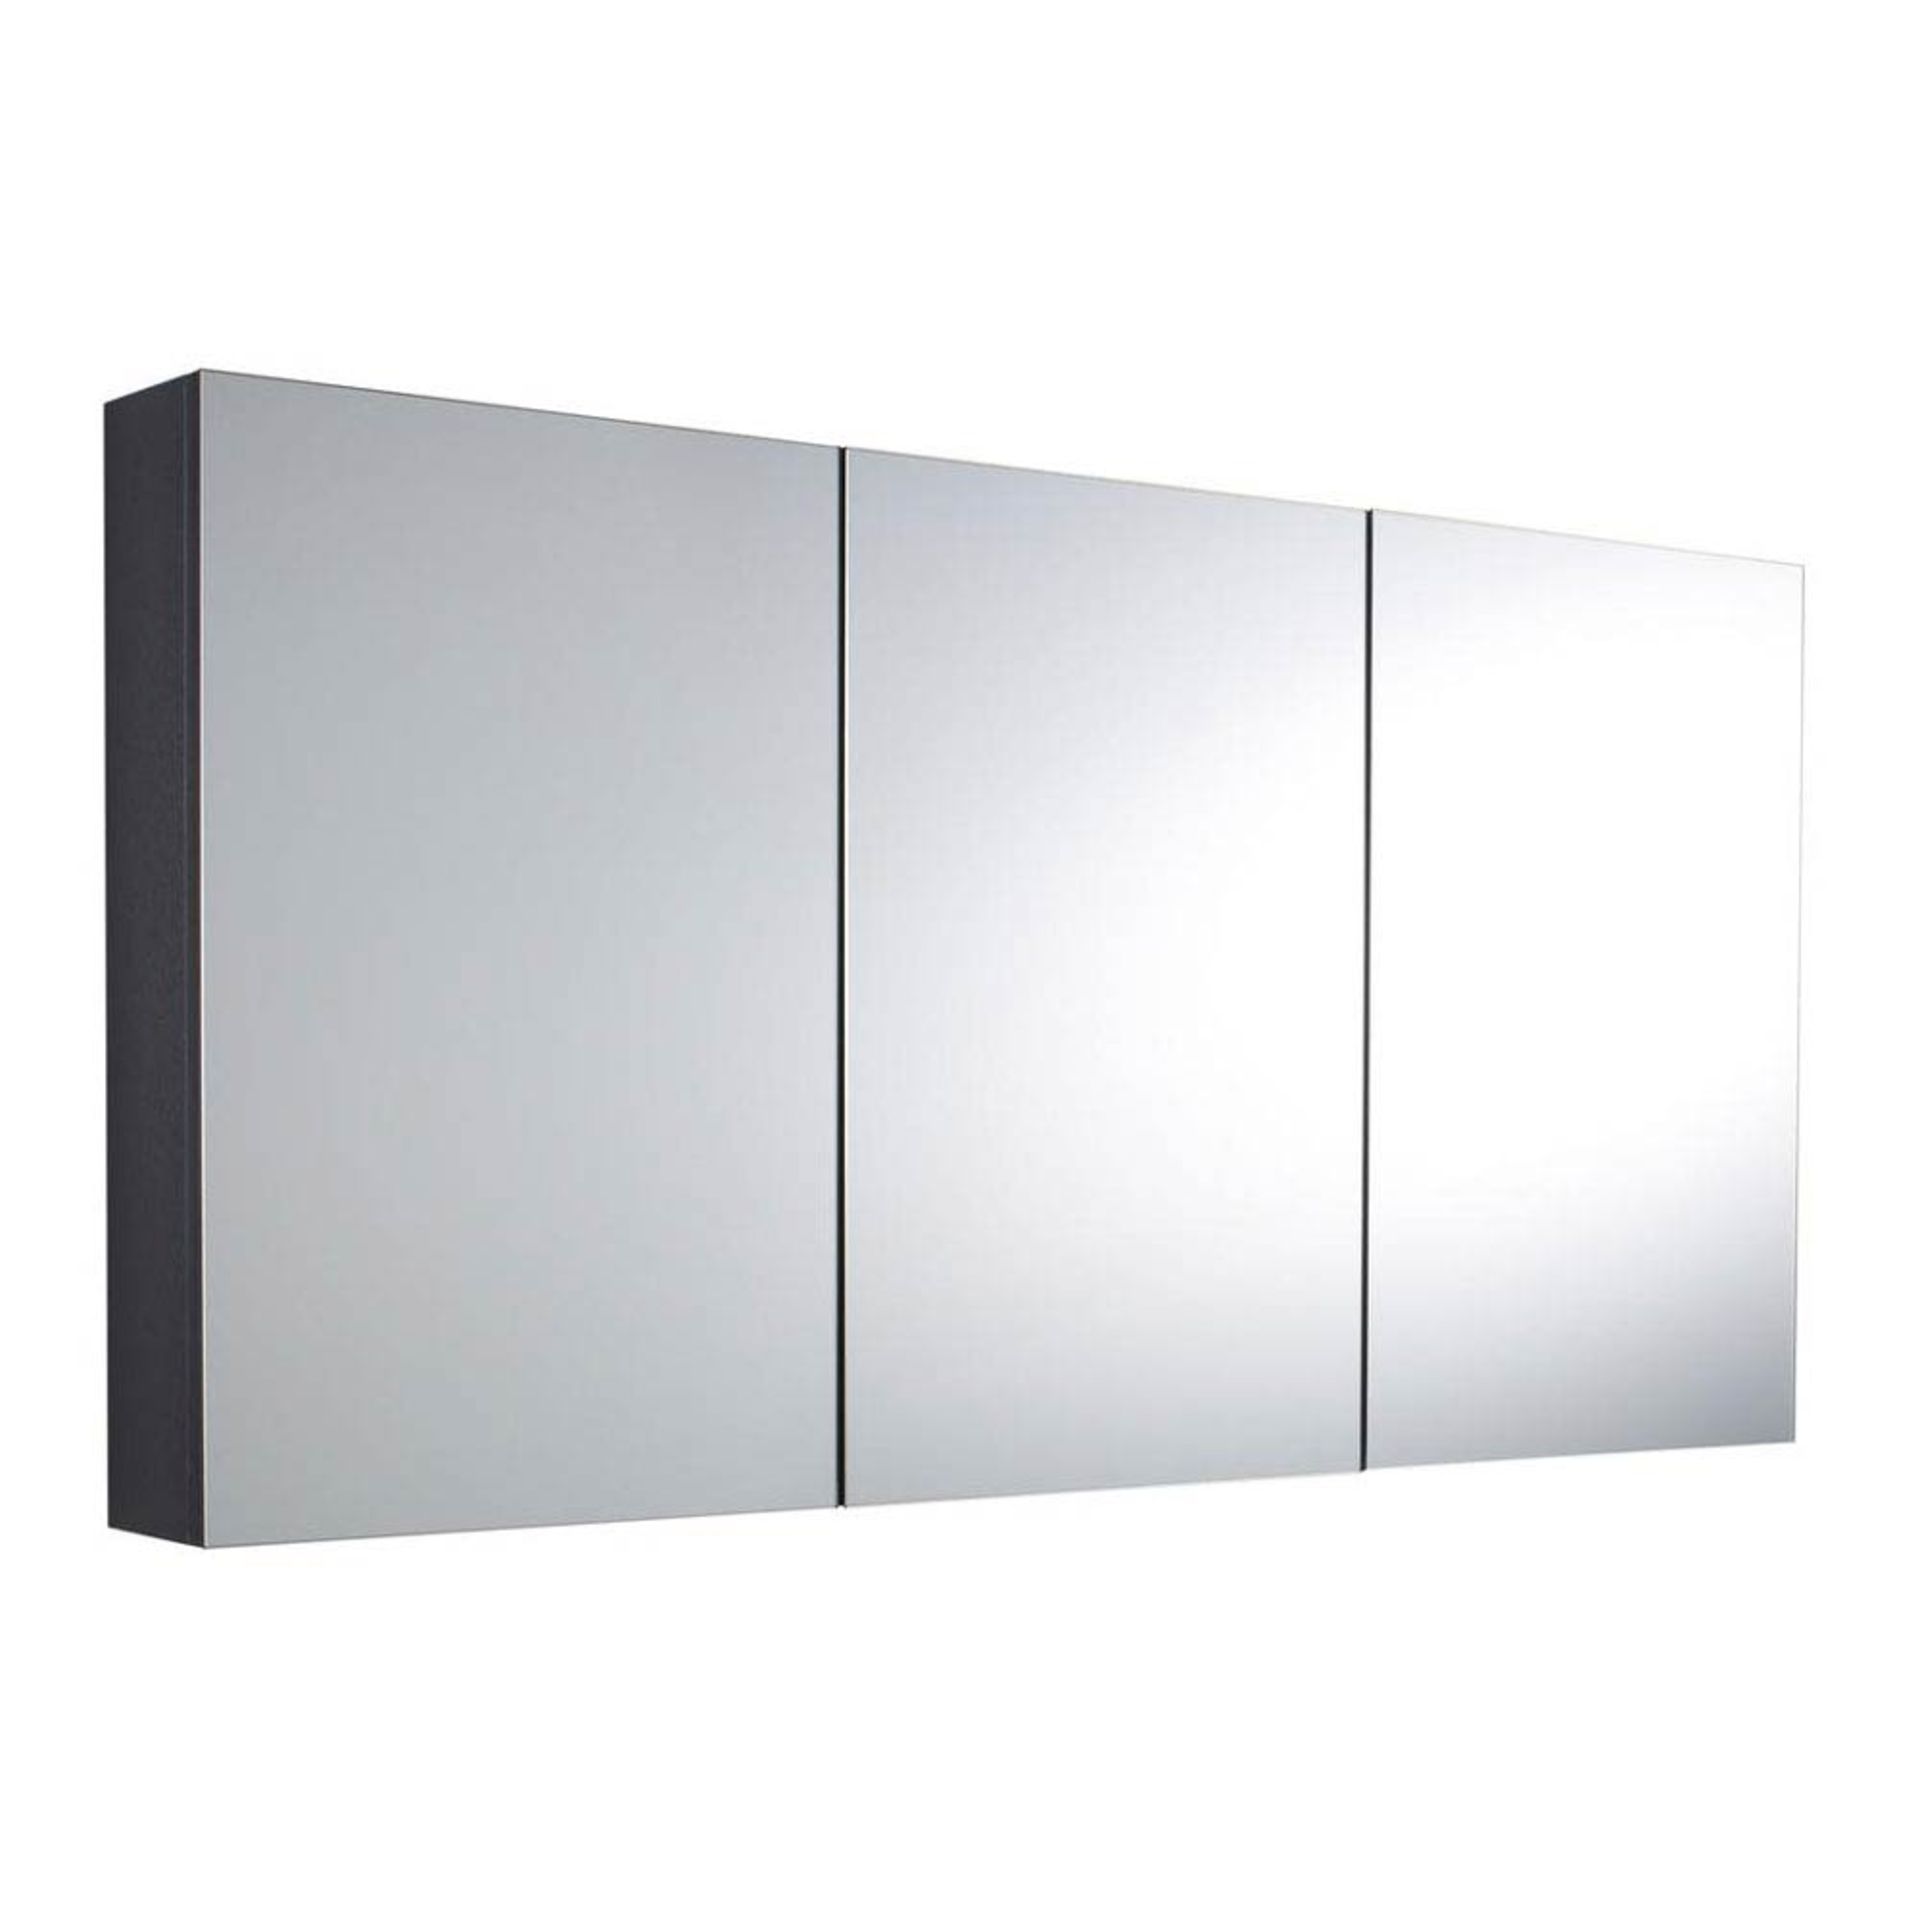 (AA205) 1350x700mm Hudson Reed Gloss Grey Quartet Mirror Cabinet. RRP £599.99. The Quartet Mirror - Image 2 of 2